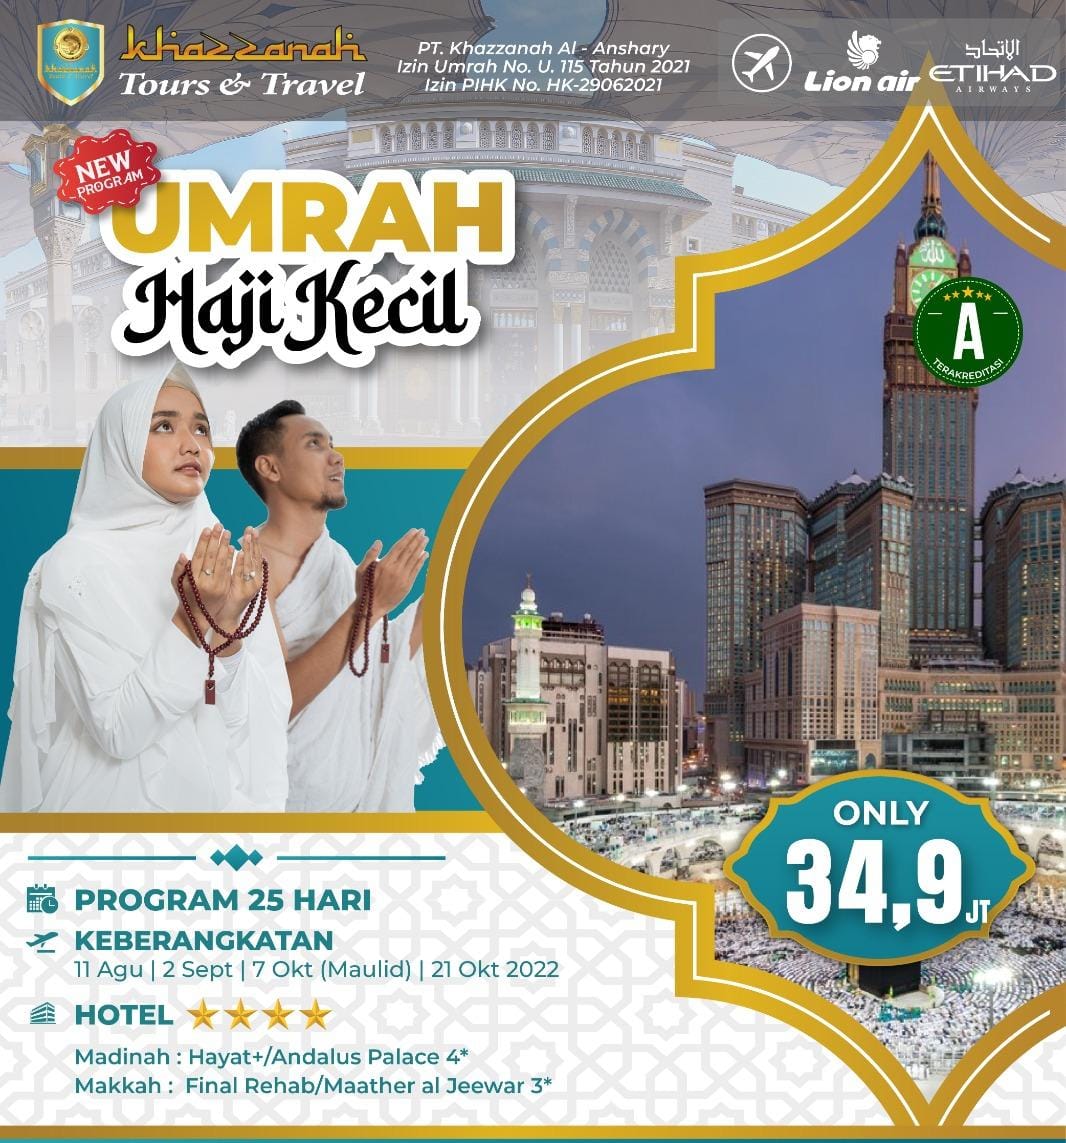 Paket Hajj Plus 2022 Khazzanah Tour